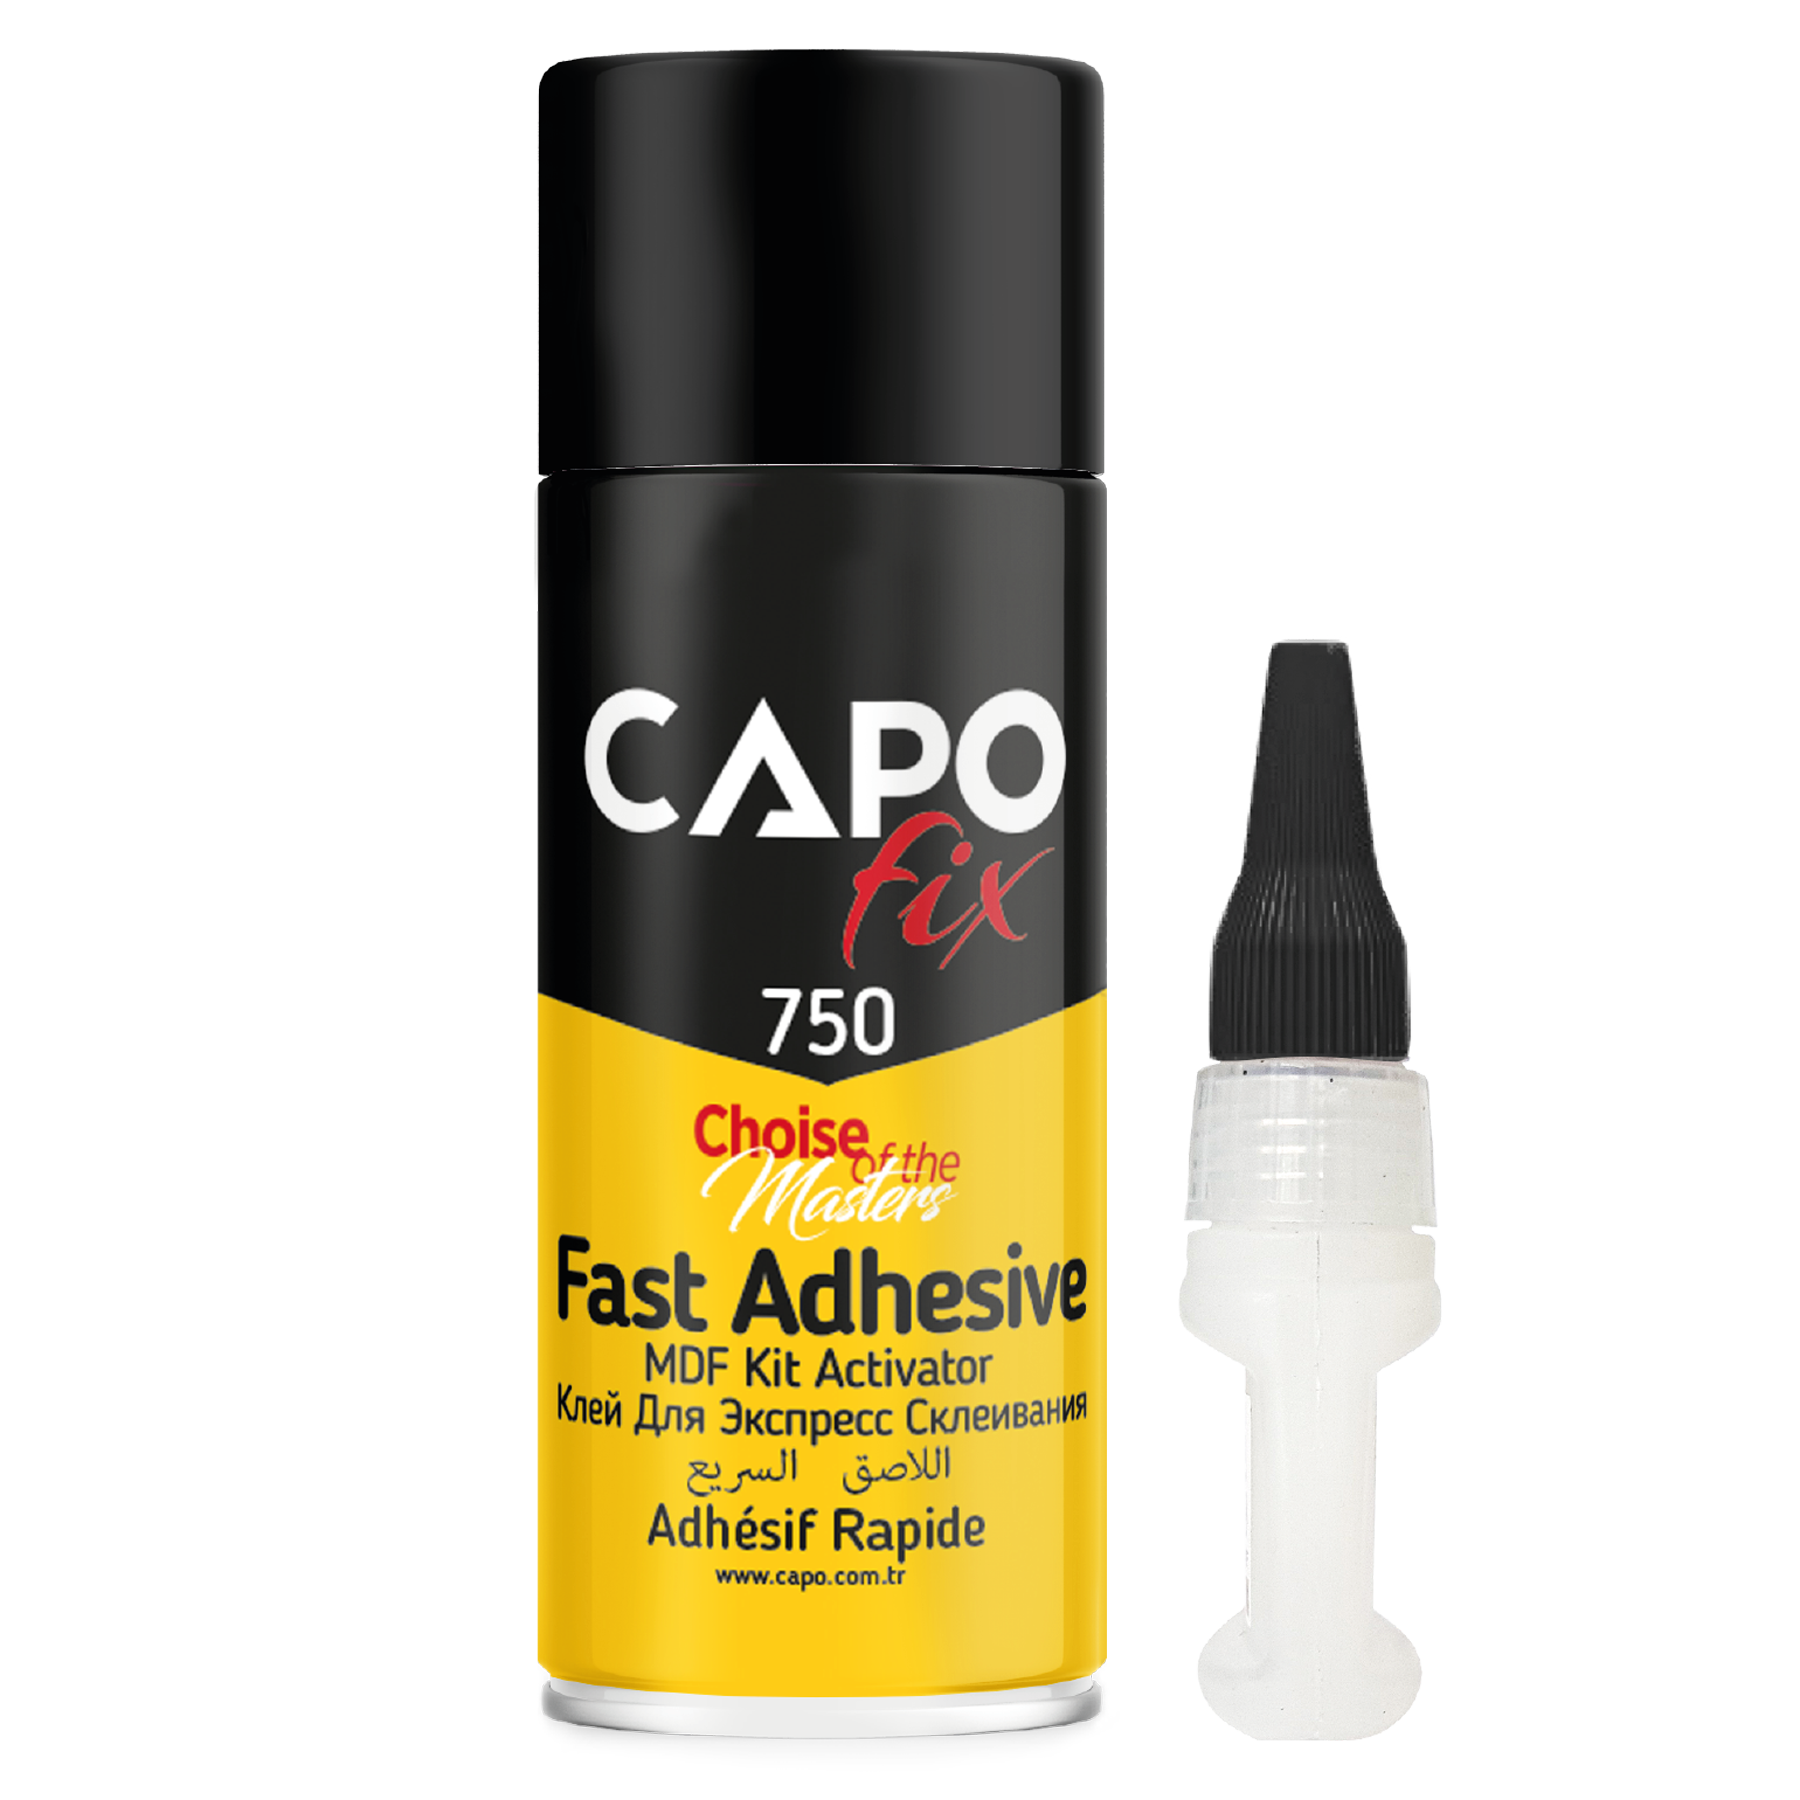 .CAPO fix Fast Adhesive.